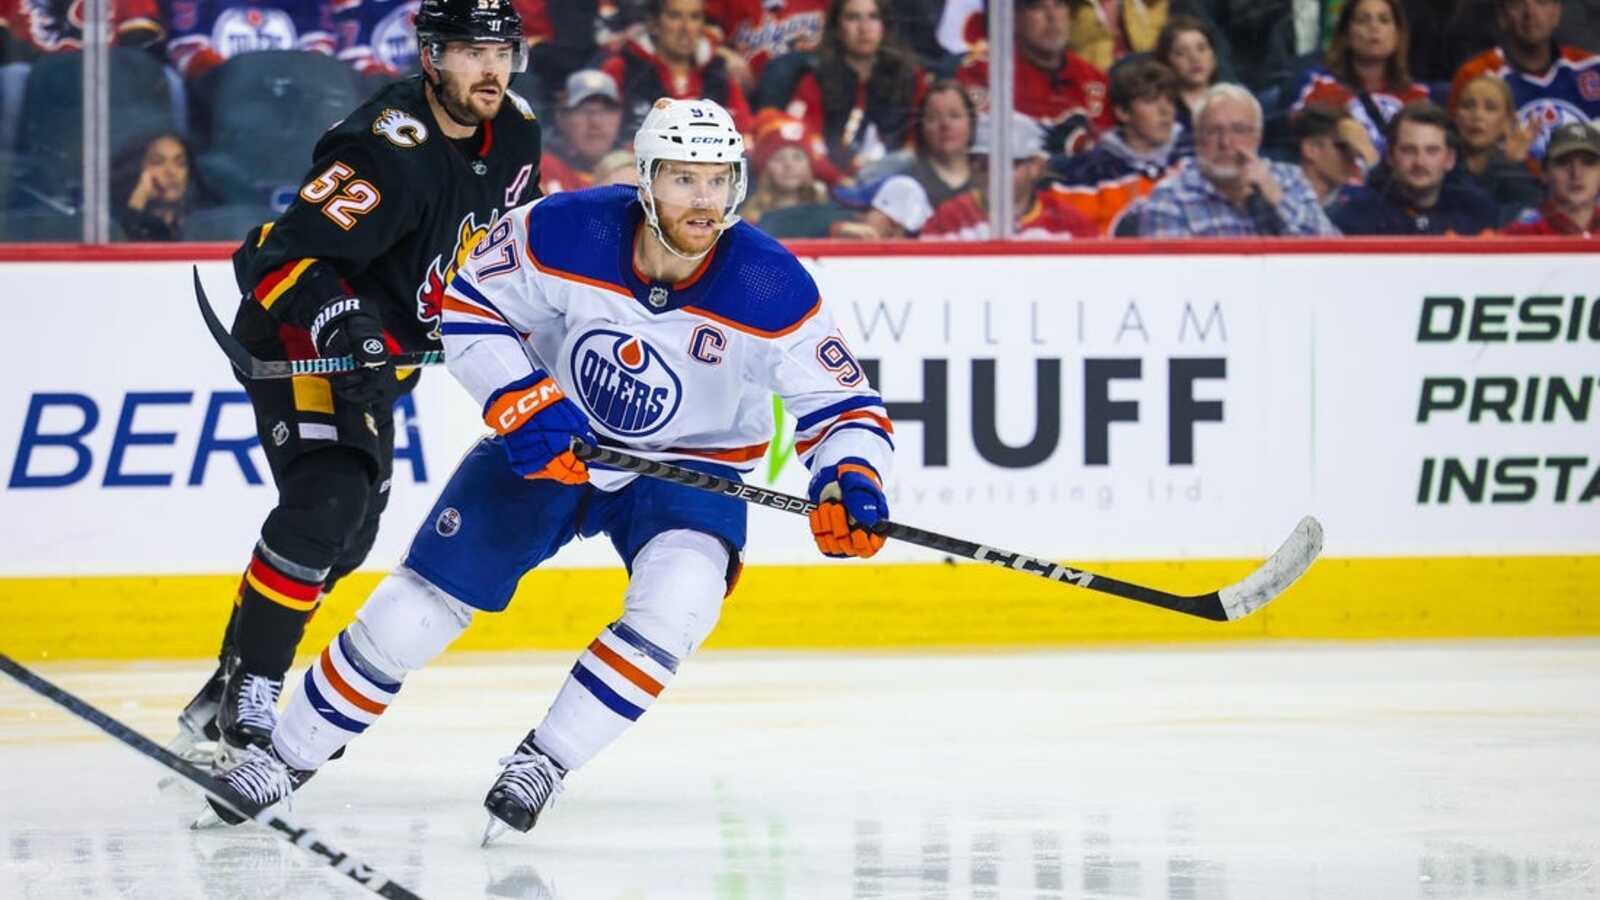 NHL roundup: Connor McDavid nears milestone as Oilers trim Flames